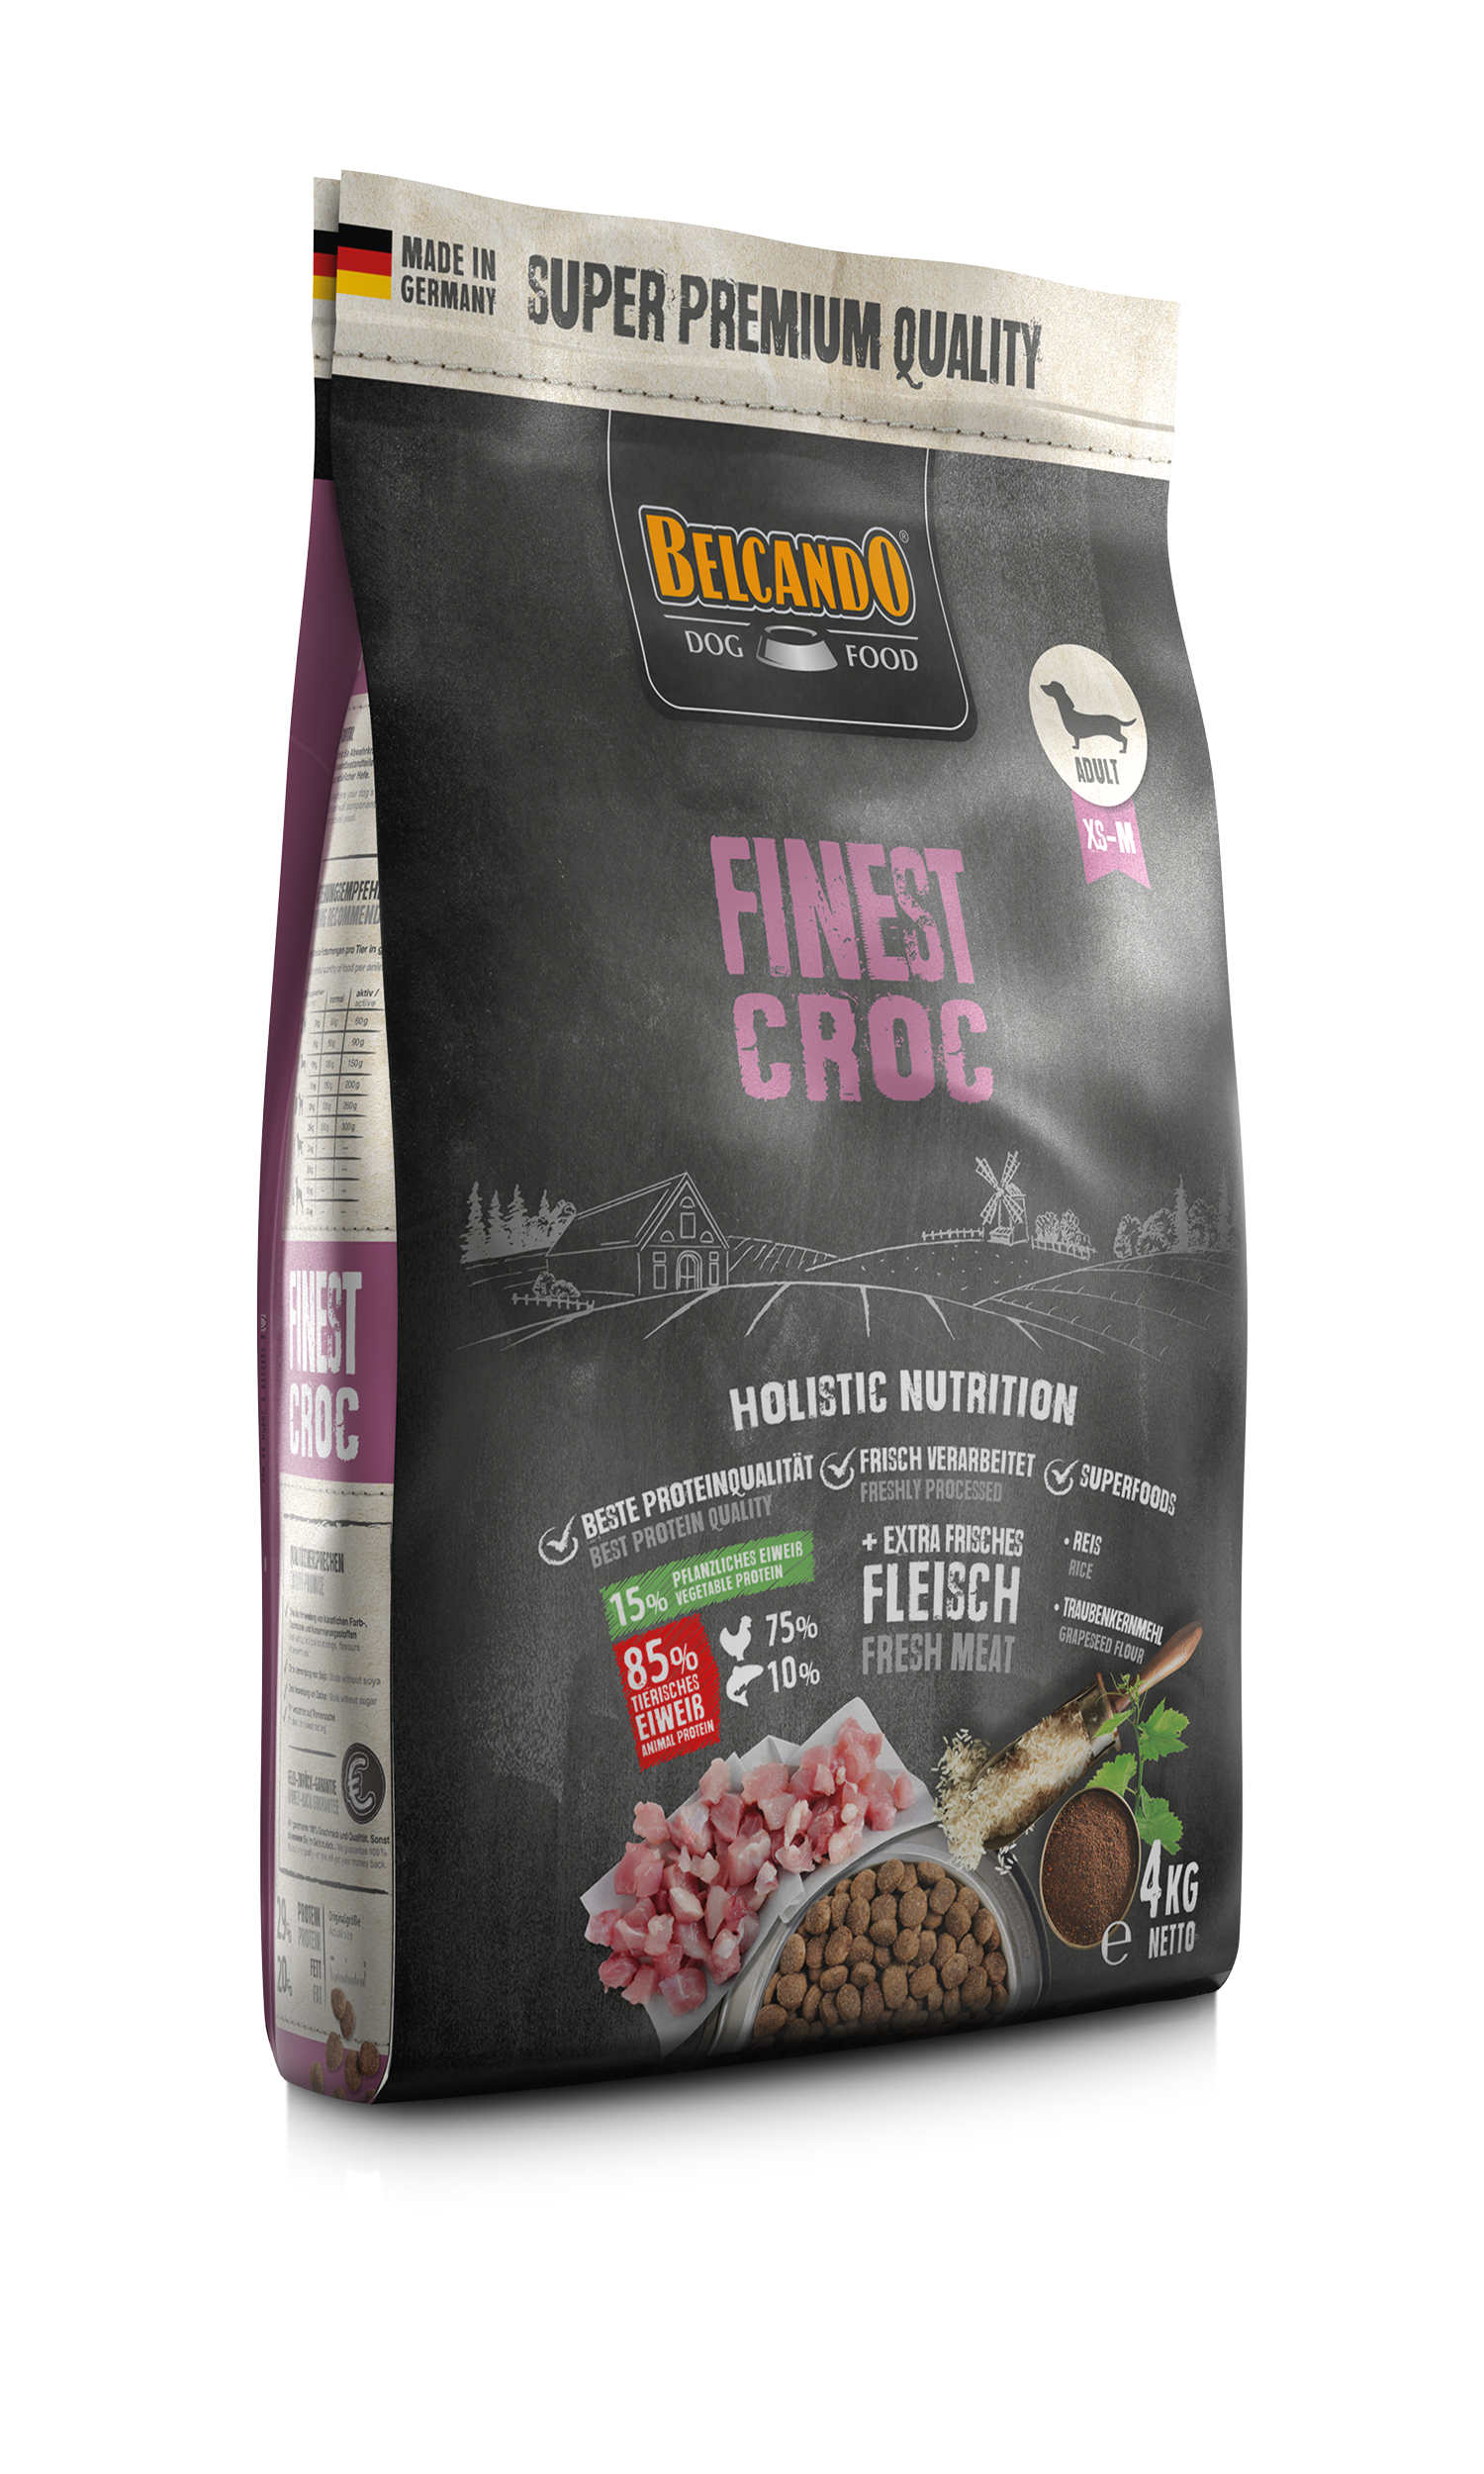 BELCANDO Finest Croc Small Breed dry dog food